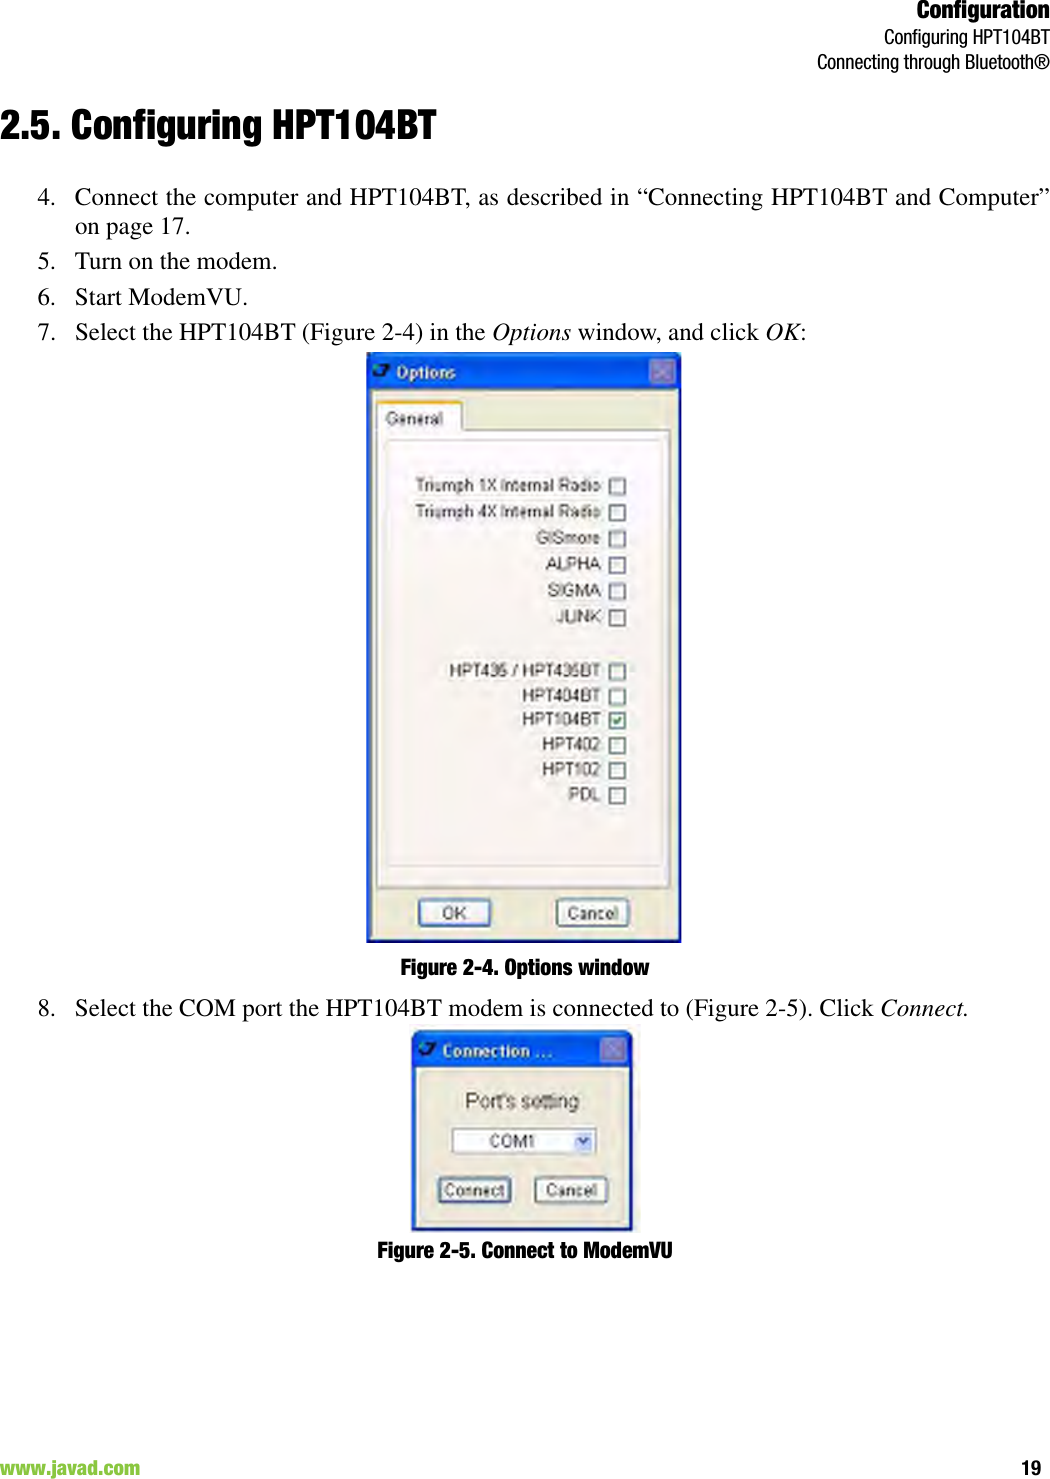 ConfigurationConfiguring HPT104BTConnecting through Bluetooth®19www.javad.com                                                                                                                                                        2.5. Configuring HPT104BT4. Connect the computer and HPT104BT, as described in “Connecting HPT104BT and Computer”on page 17. 5. Turn on the modem.6. Start ModemVU. 7. Select the HPT104BT (Figure 2-4) in the Options window, and click OK:Figure 2-4. Options window8. Select the COM port the HPT104BT modem is connected to (Figure 2-5). Click Connect.Figure 2-5. Connect to ModemVU